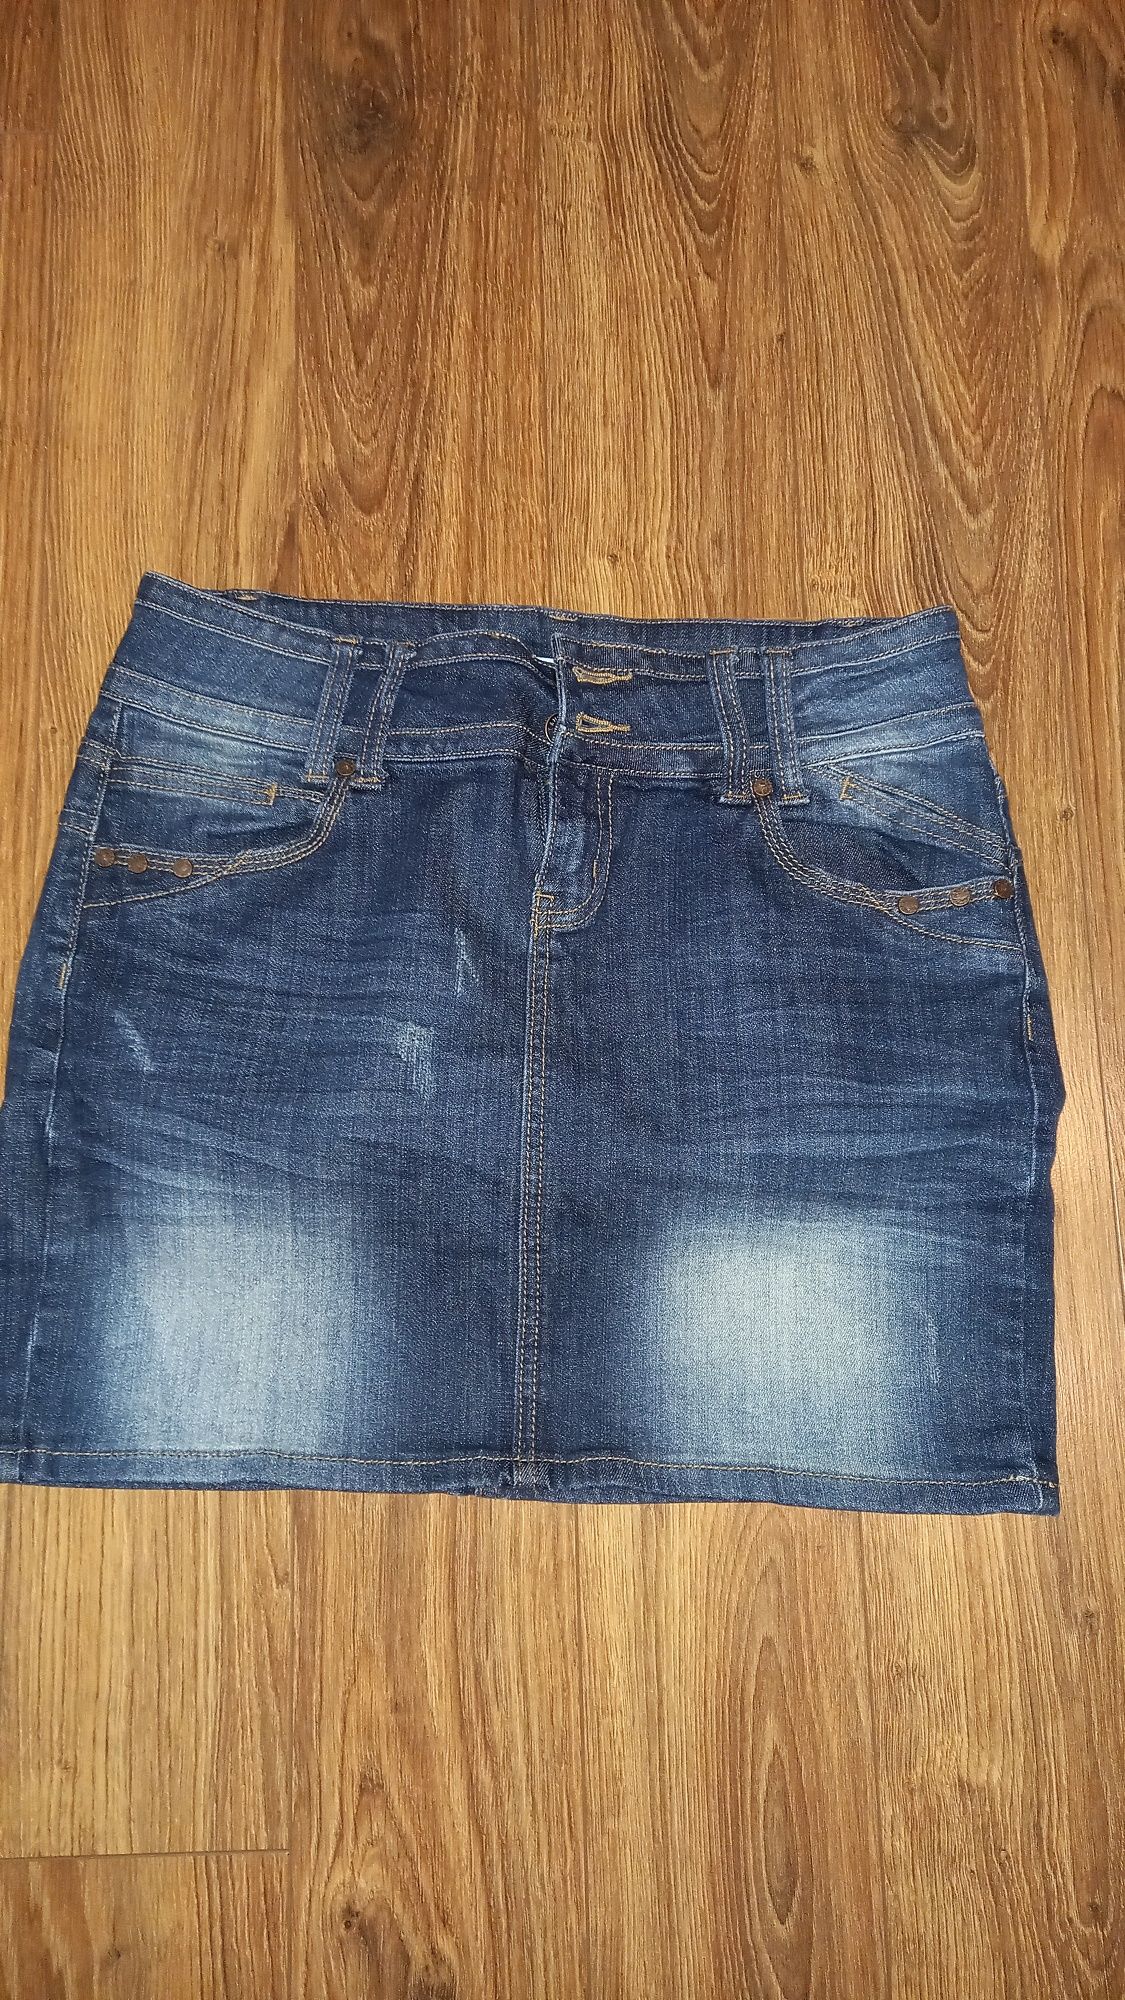 Spódnica spódniczka moni jeansowa dżinsowa promod 36